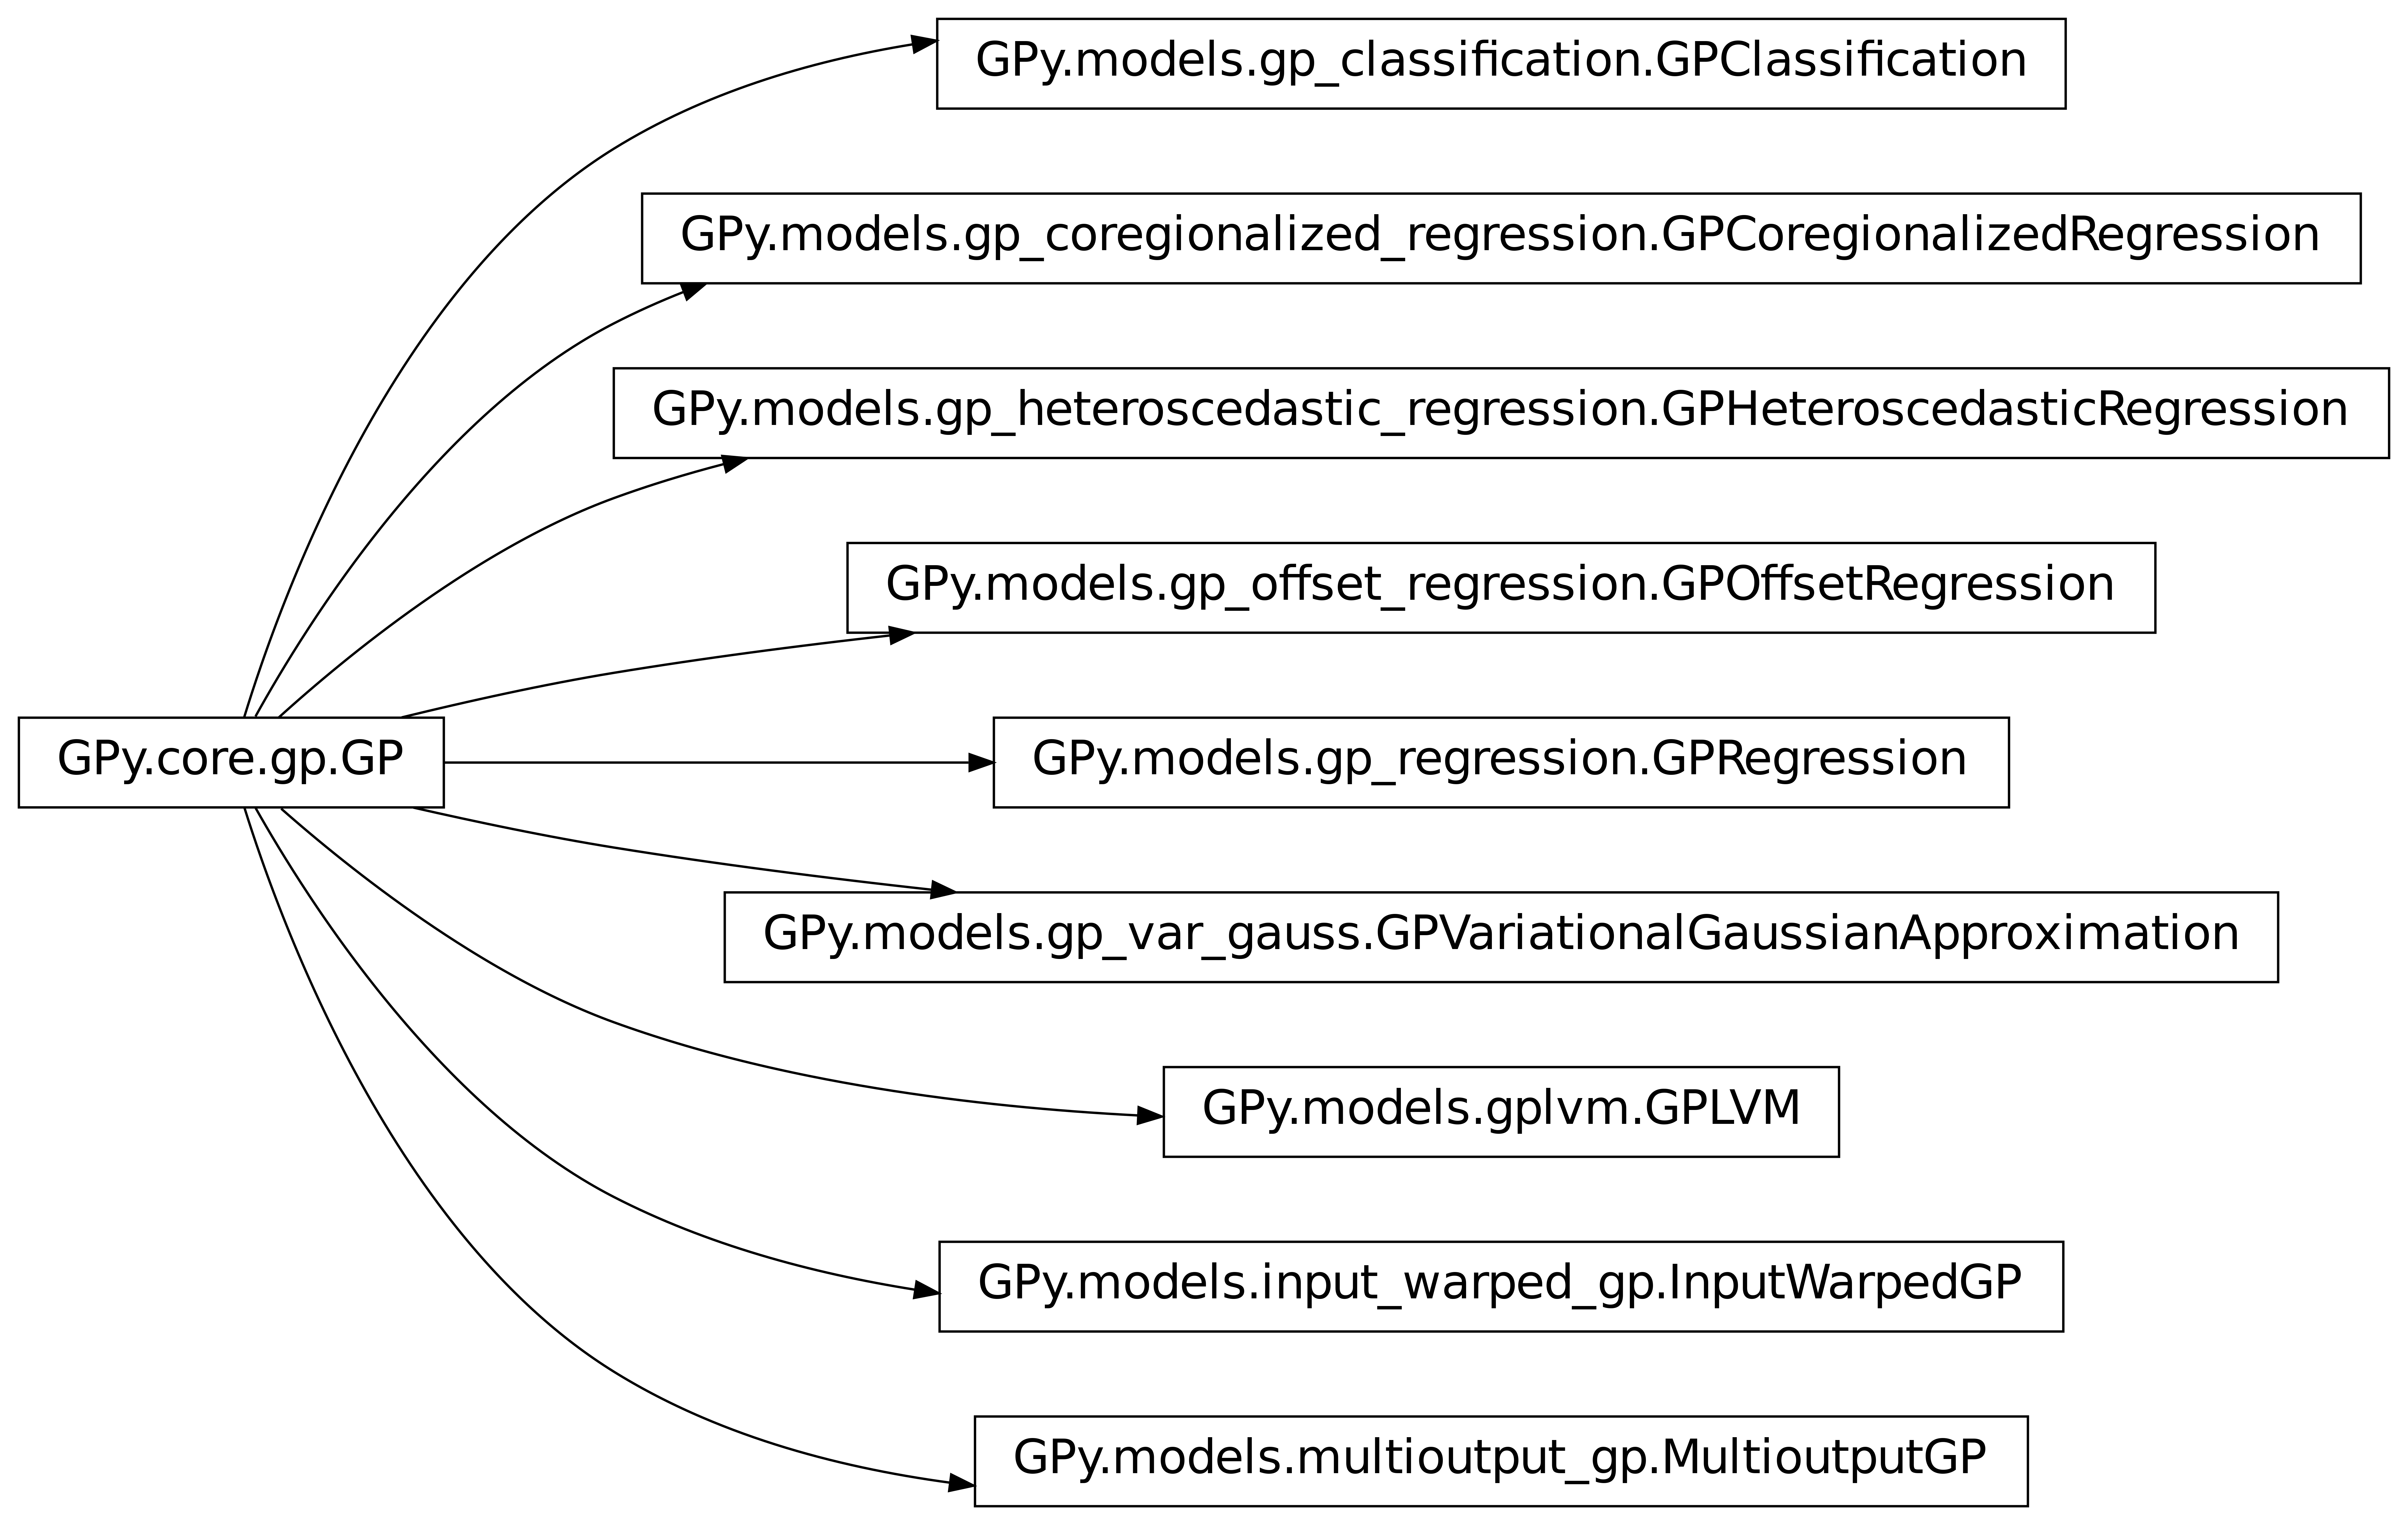 Inheritance diagram of GPy.models.gp_classification, GPy.models.gp_coregionalized_regression, GPy.models.gp_heteroscedastic_regression, GPy.models.gp_offset_regression, GPy.models.gp_regression, GPy.models.gp_var_gauss, GPy.models.gplvm, GPy.models.input_warped_gp, GPy.models.multioutput_gp